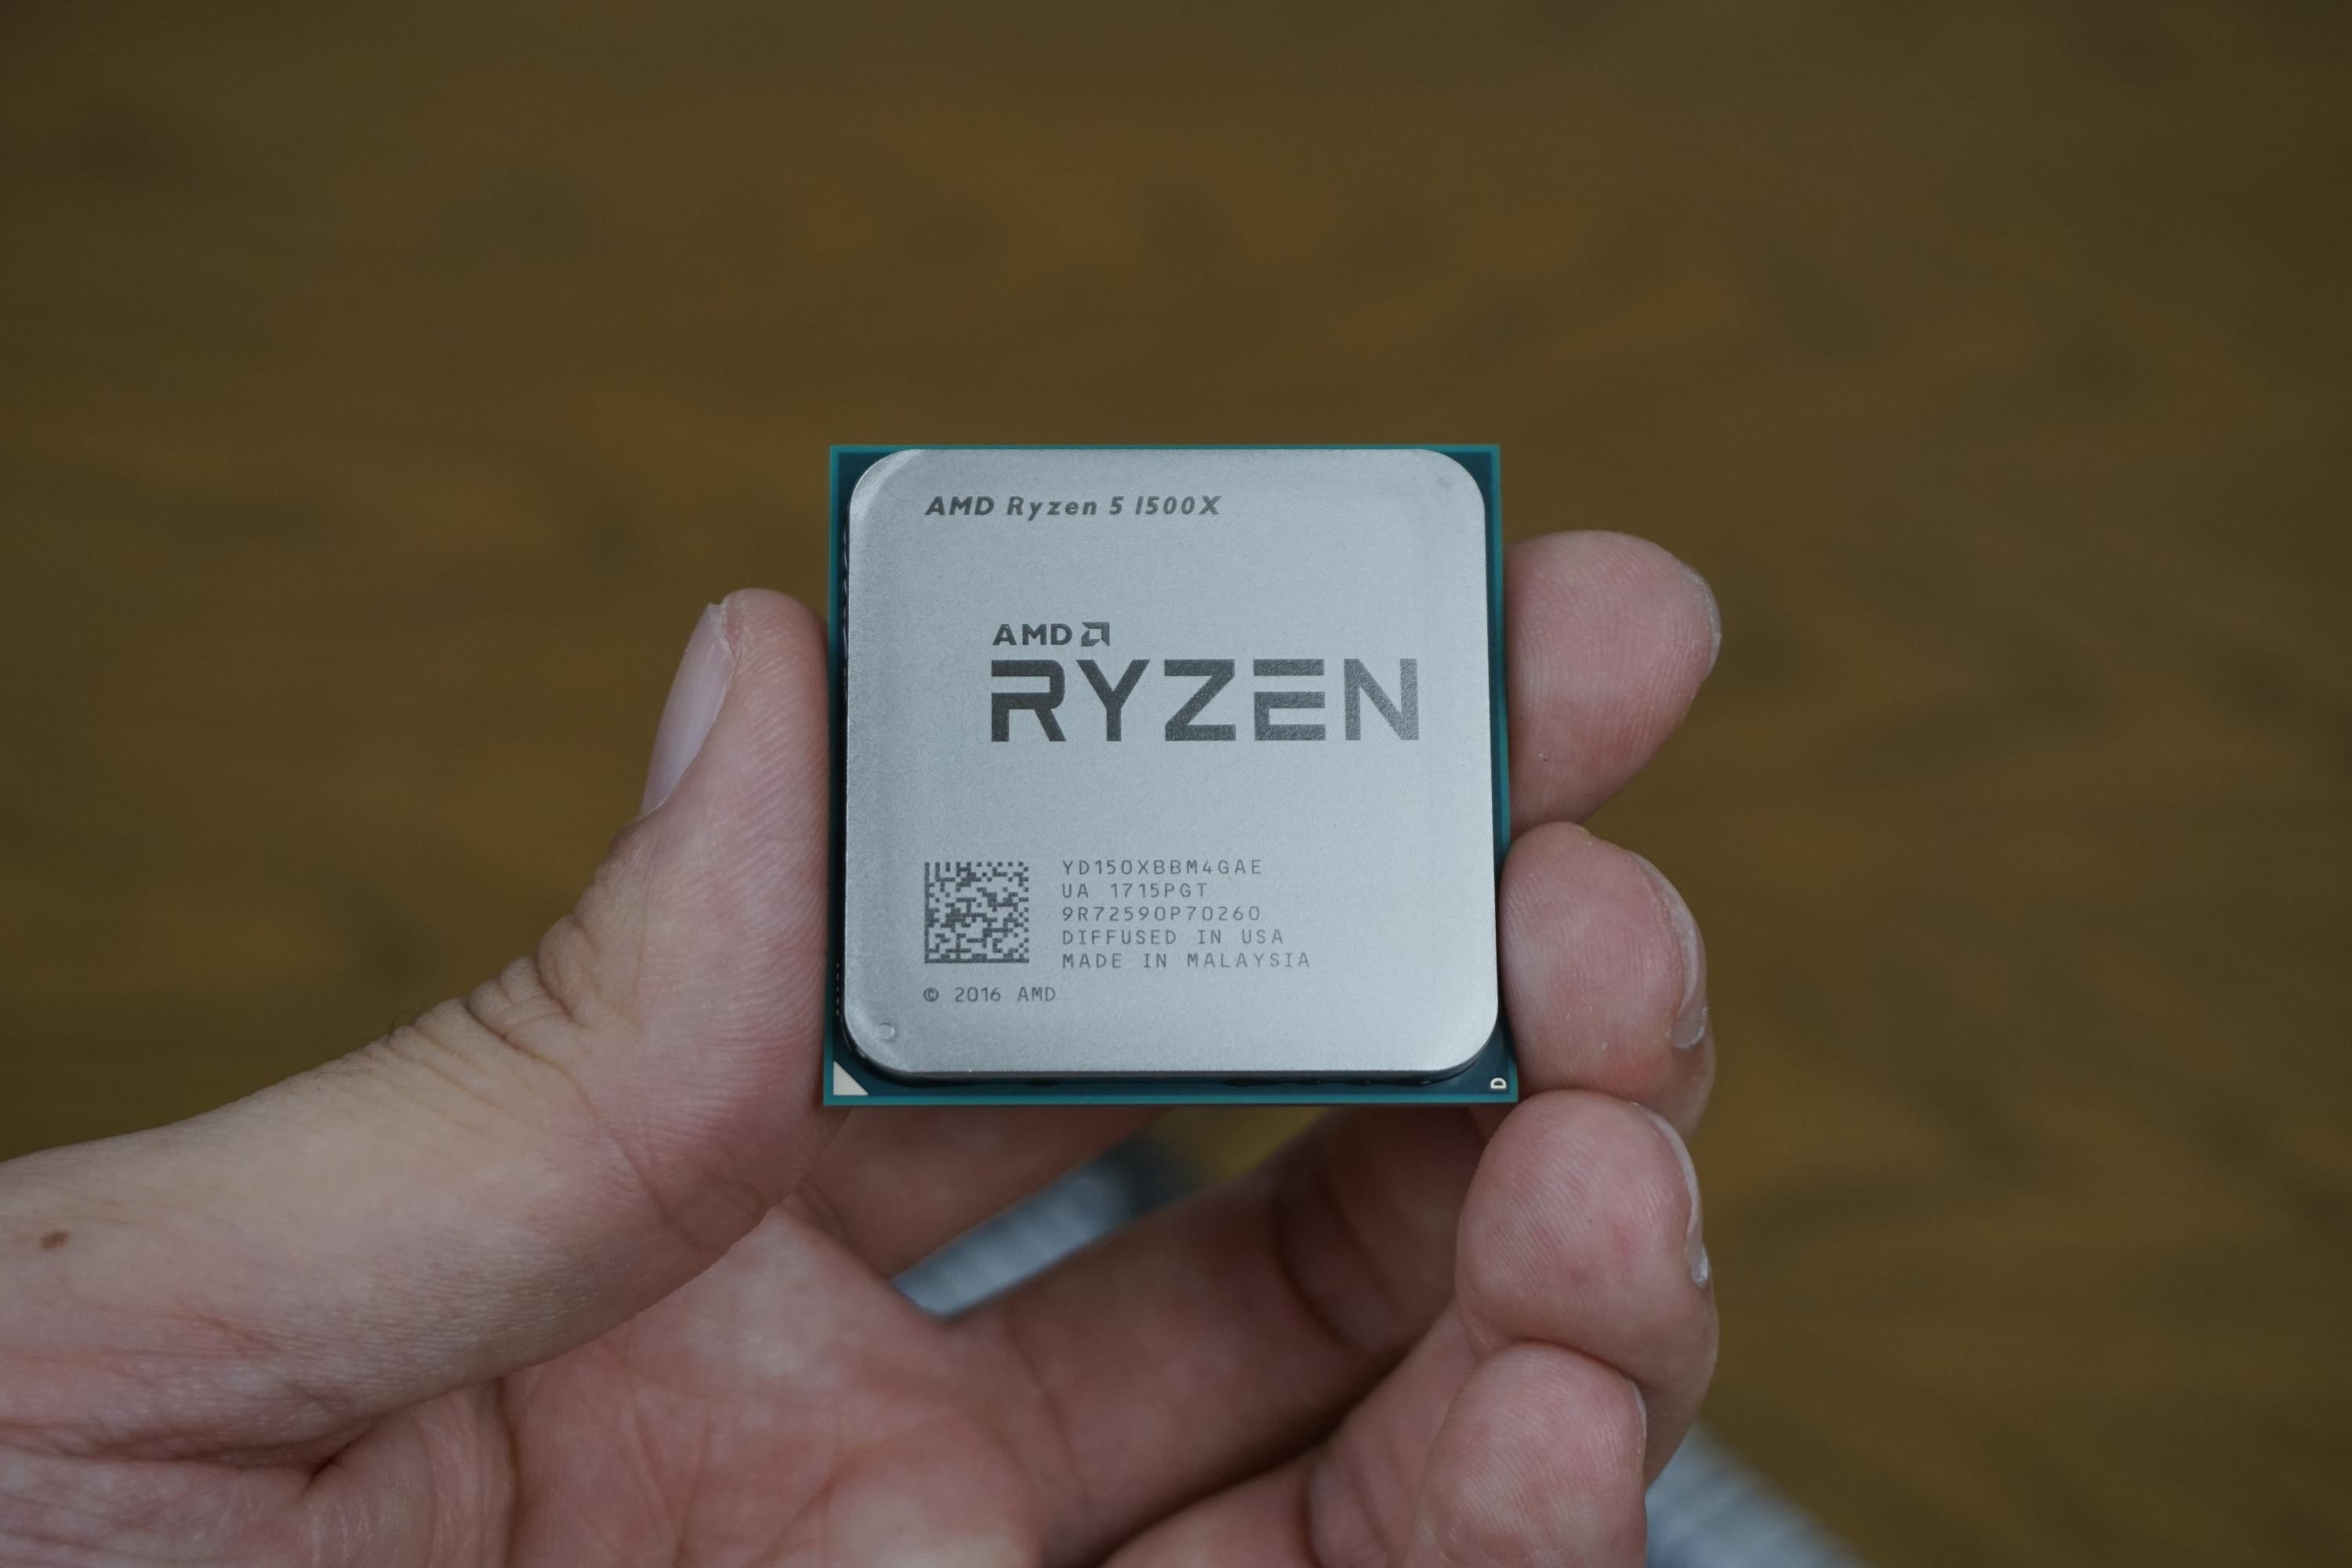 AMD Ryzen 5 1500x Rx 580